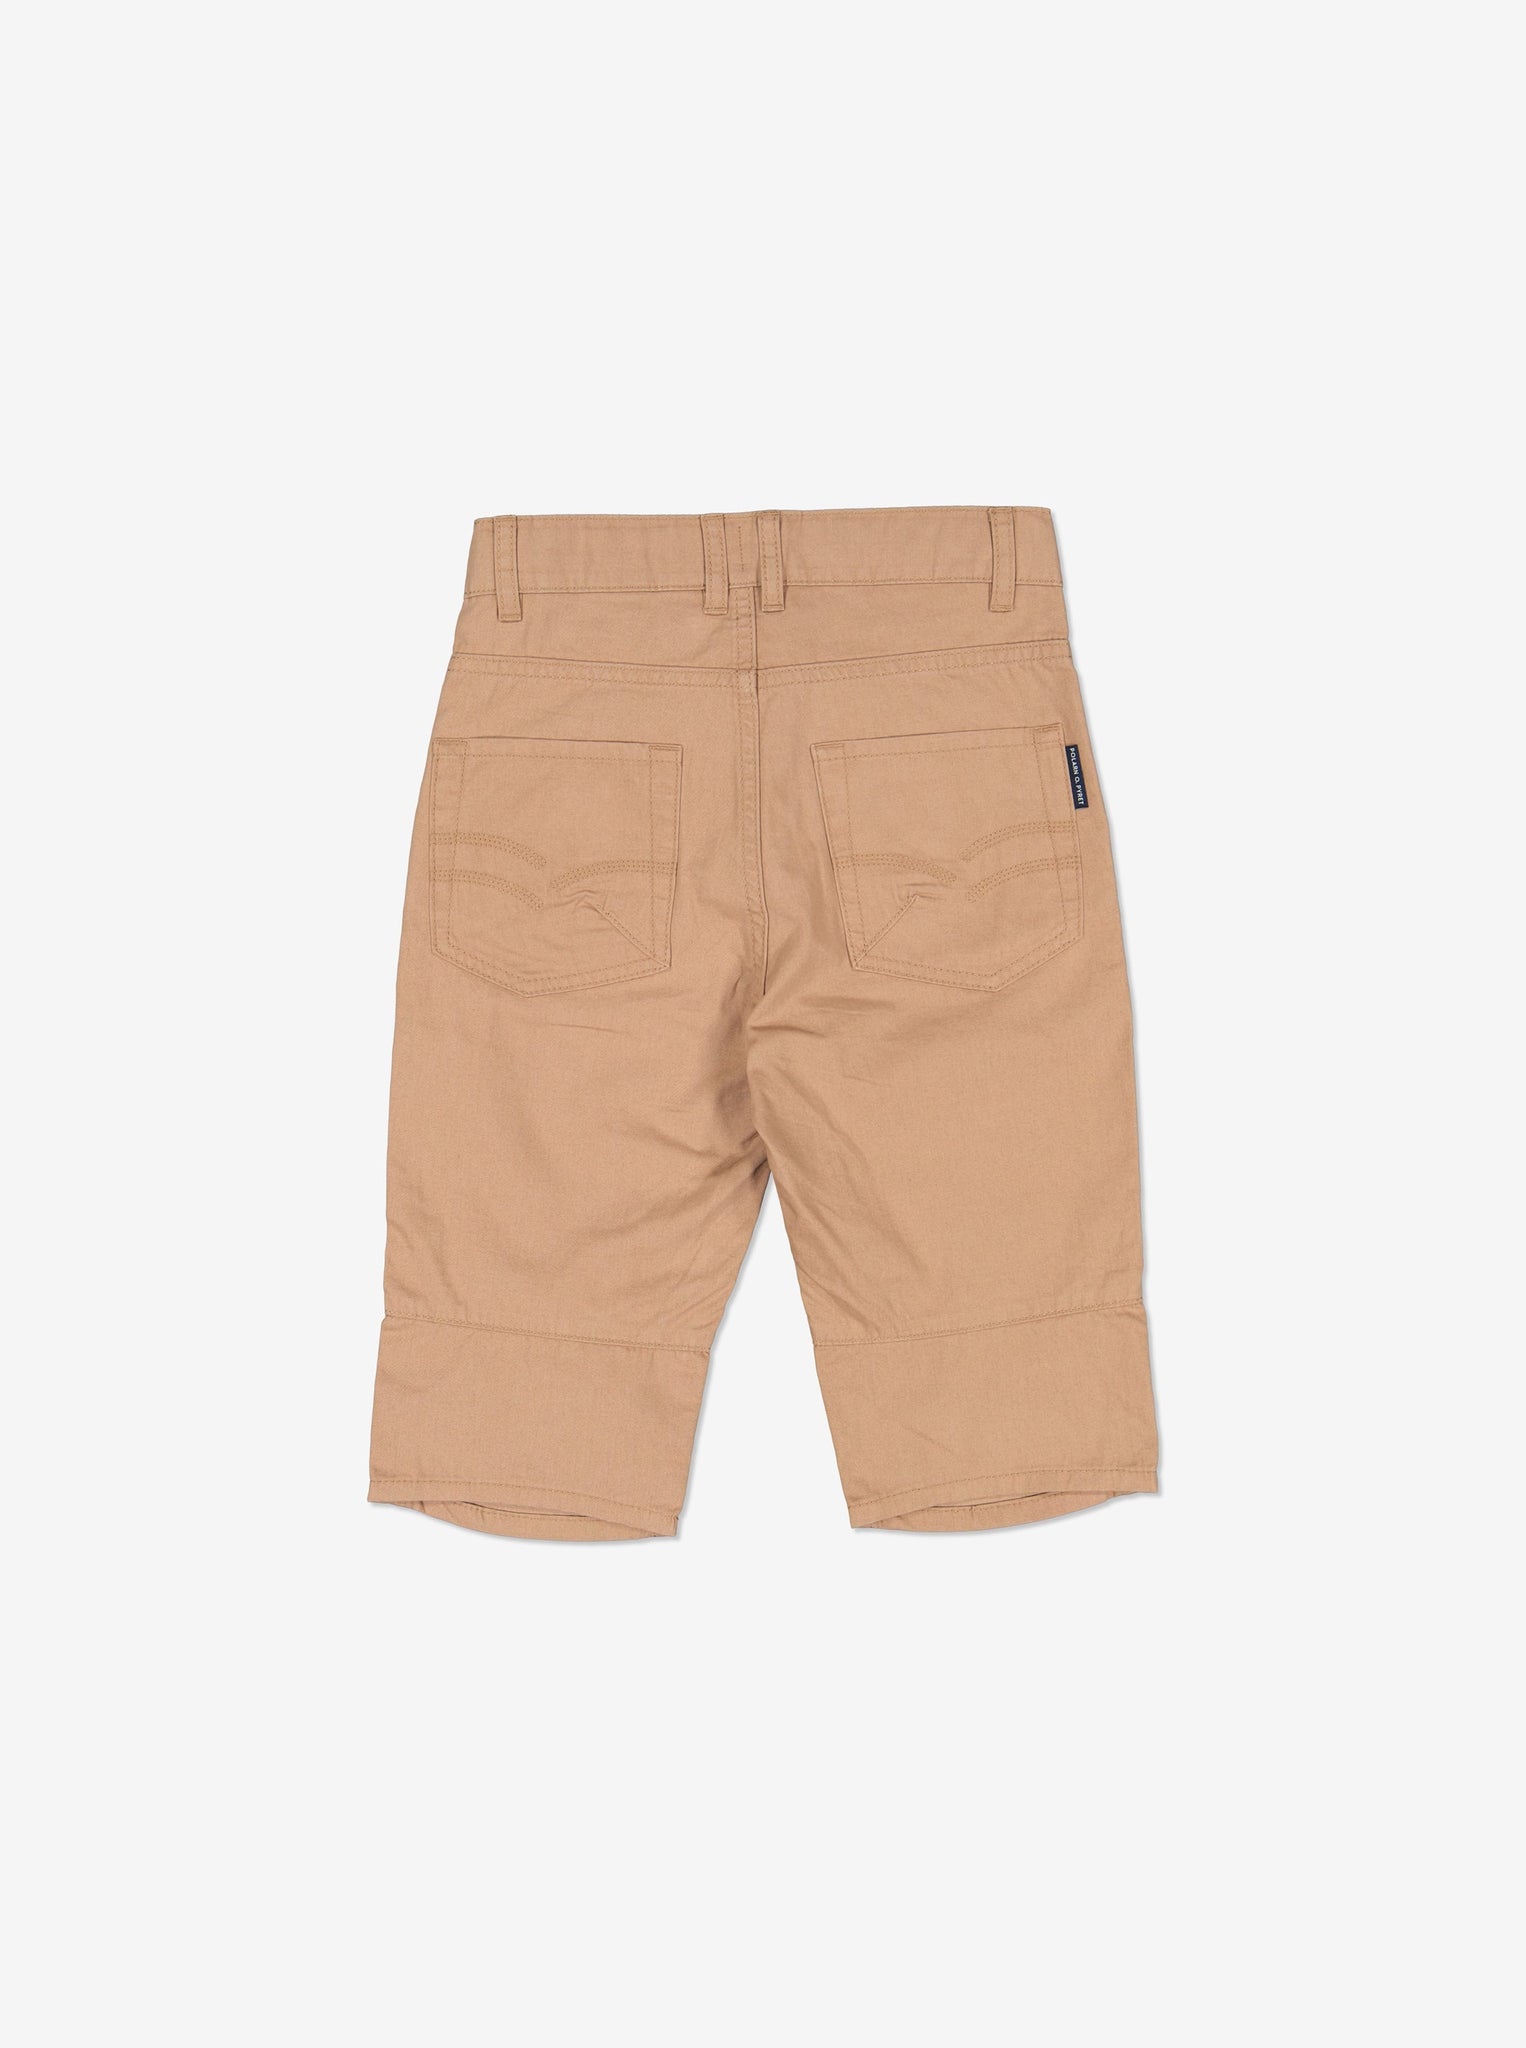  Brown Kids Chino Shorts from Polarn O. Pyret Kidswear. Made using environmentally friendly materials.